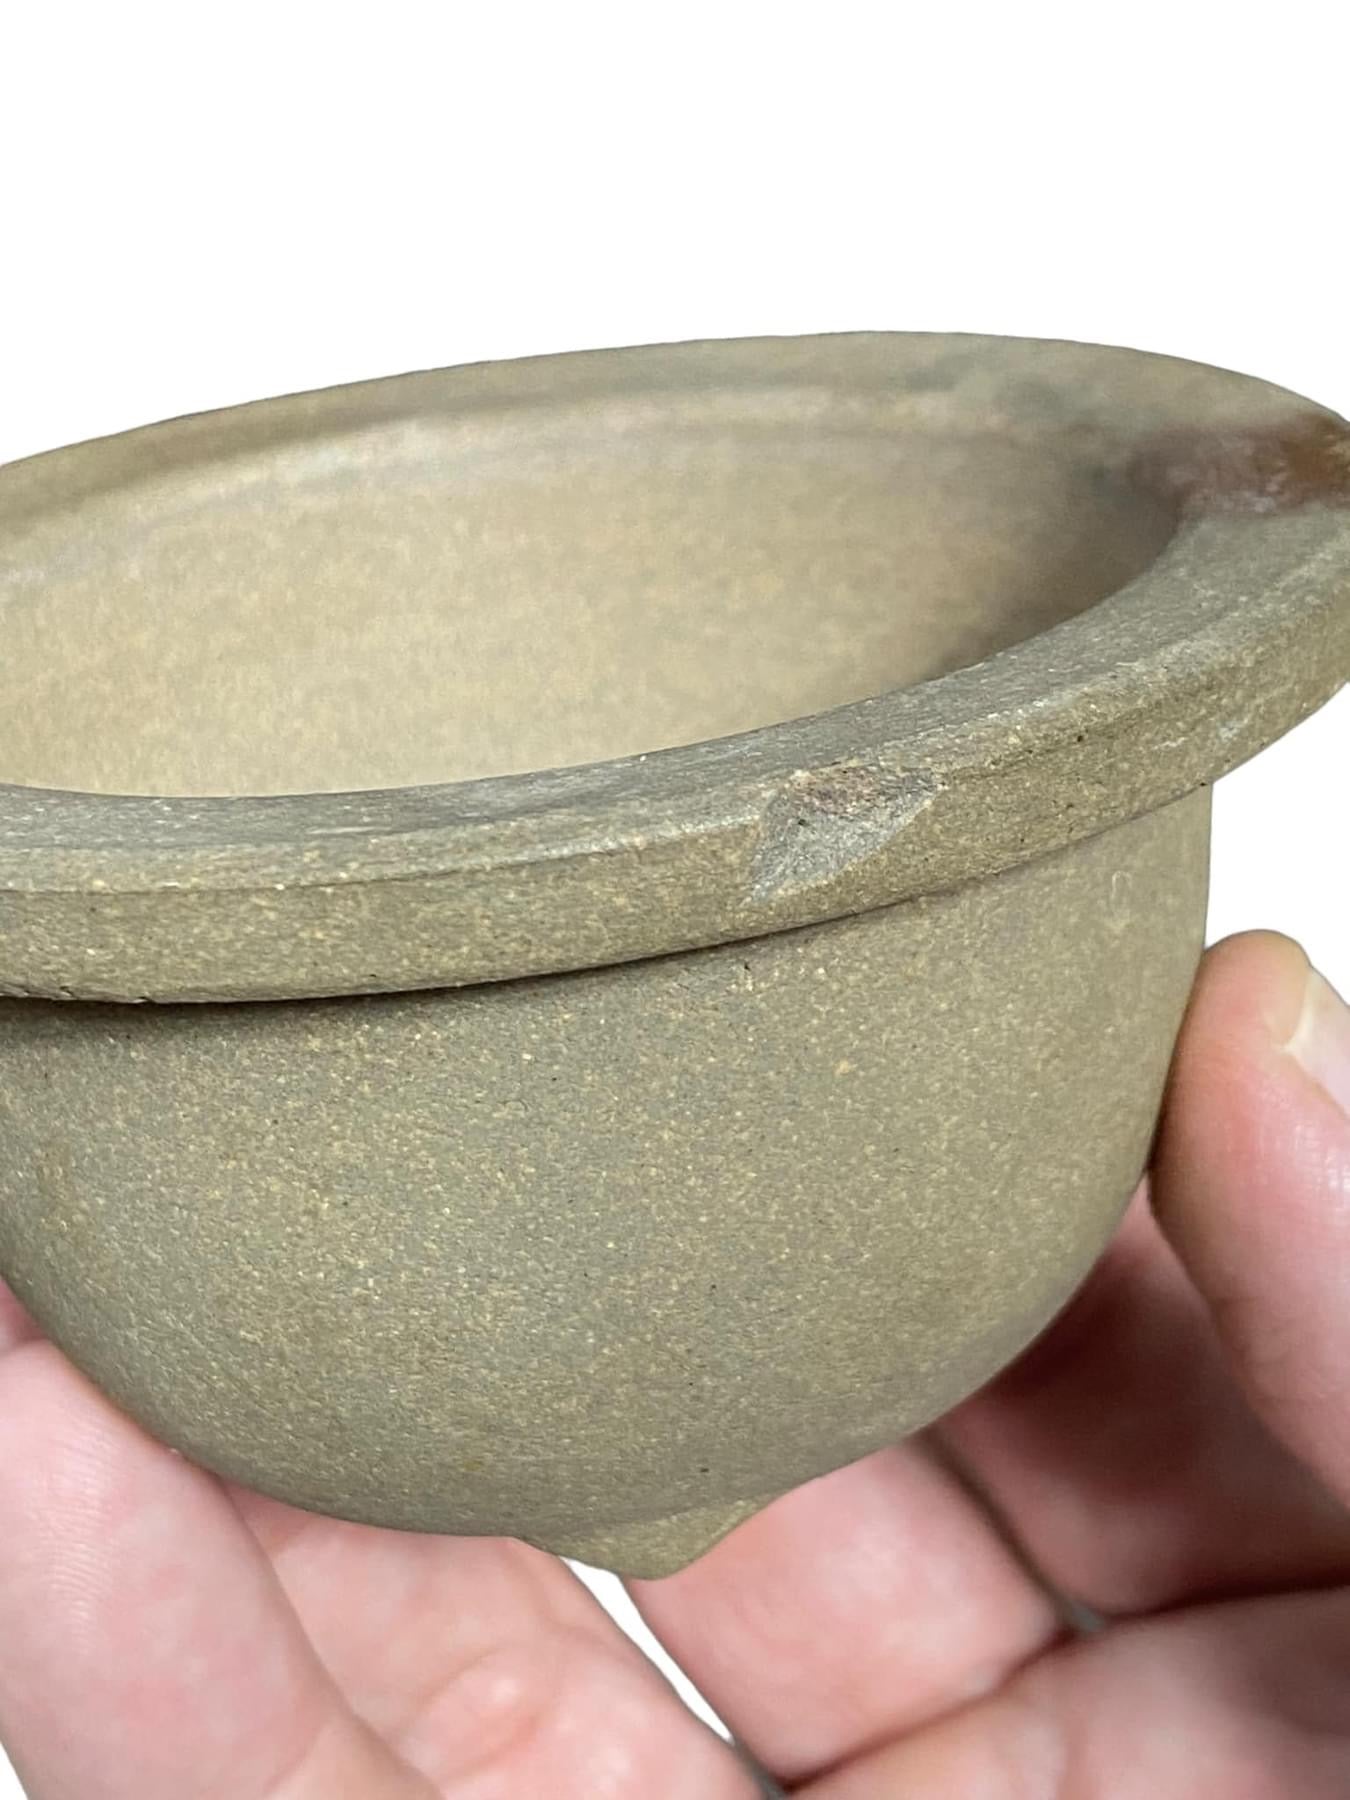 Japanese - Thick Flared Rim Bowl Style Bonsai Pot